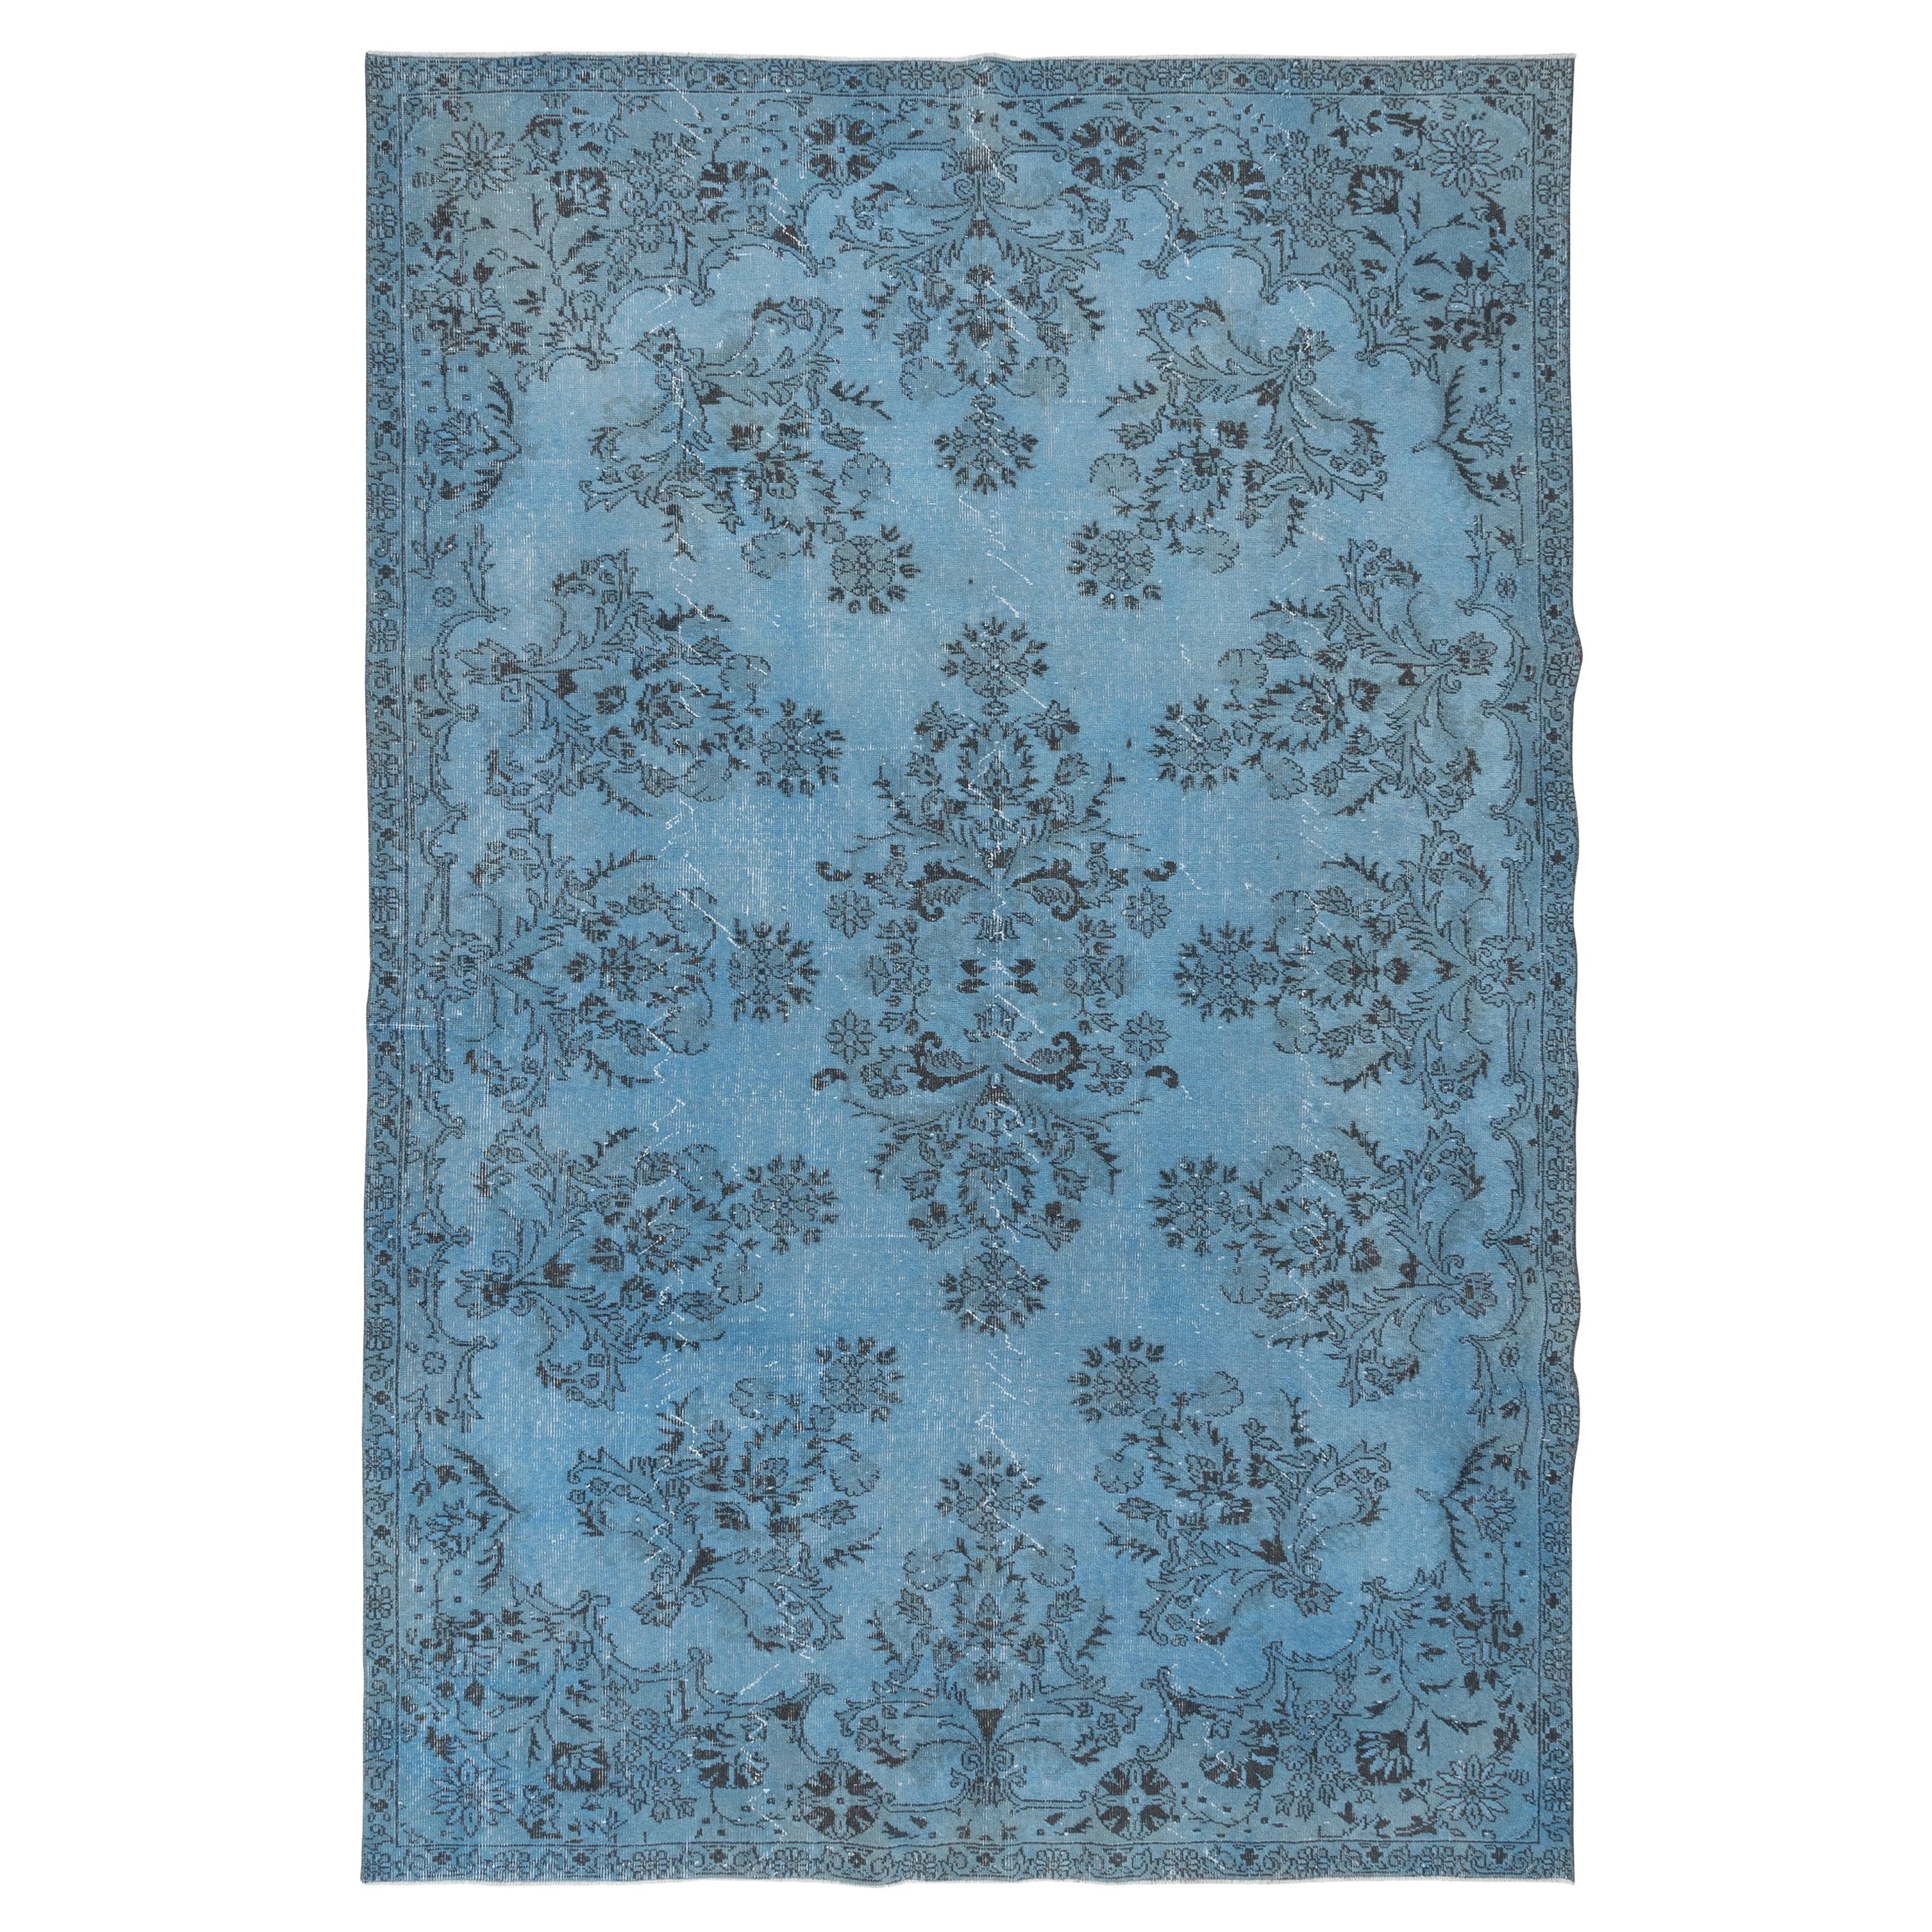 7x10.6 Ft Light Blue Modern Area Rug, Handmade Turkish Wool Living Room Carpet For Sale